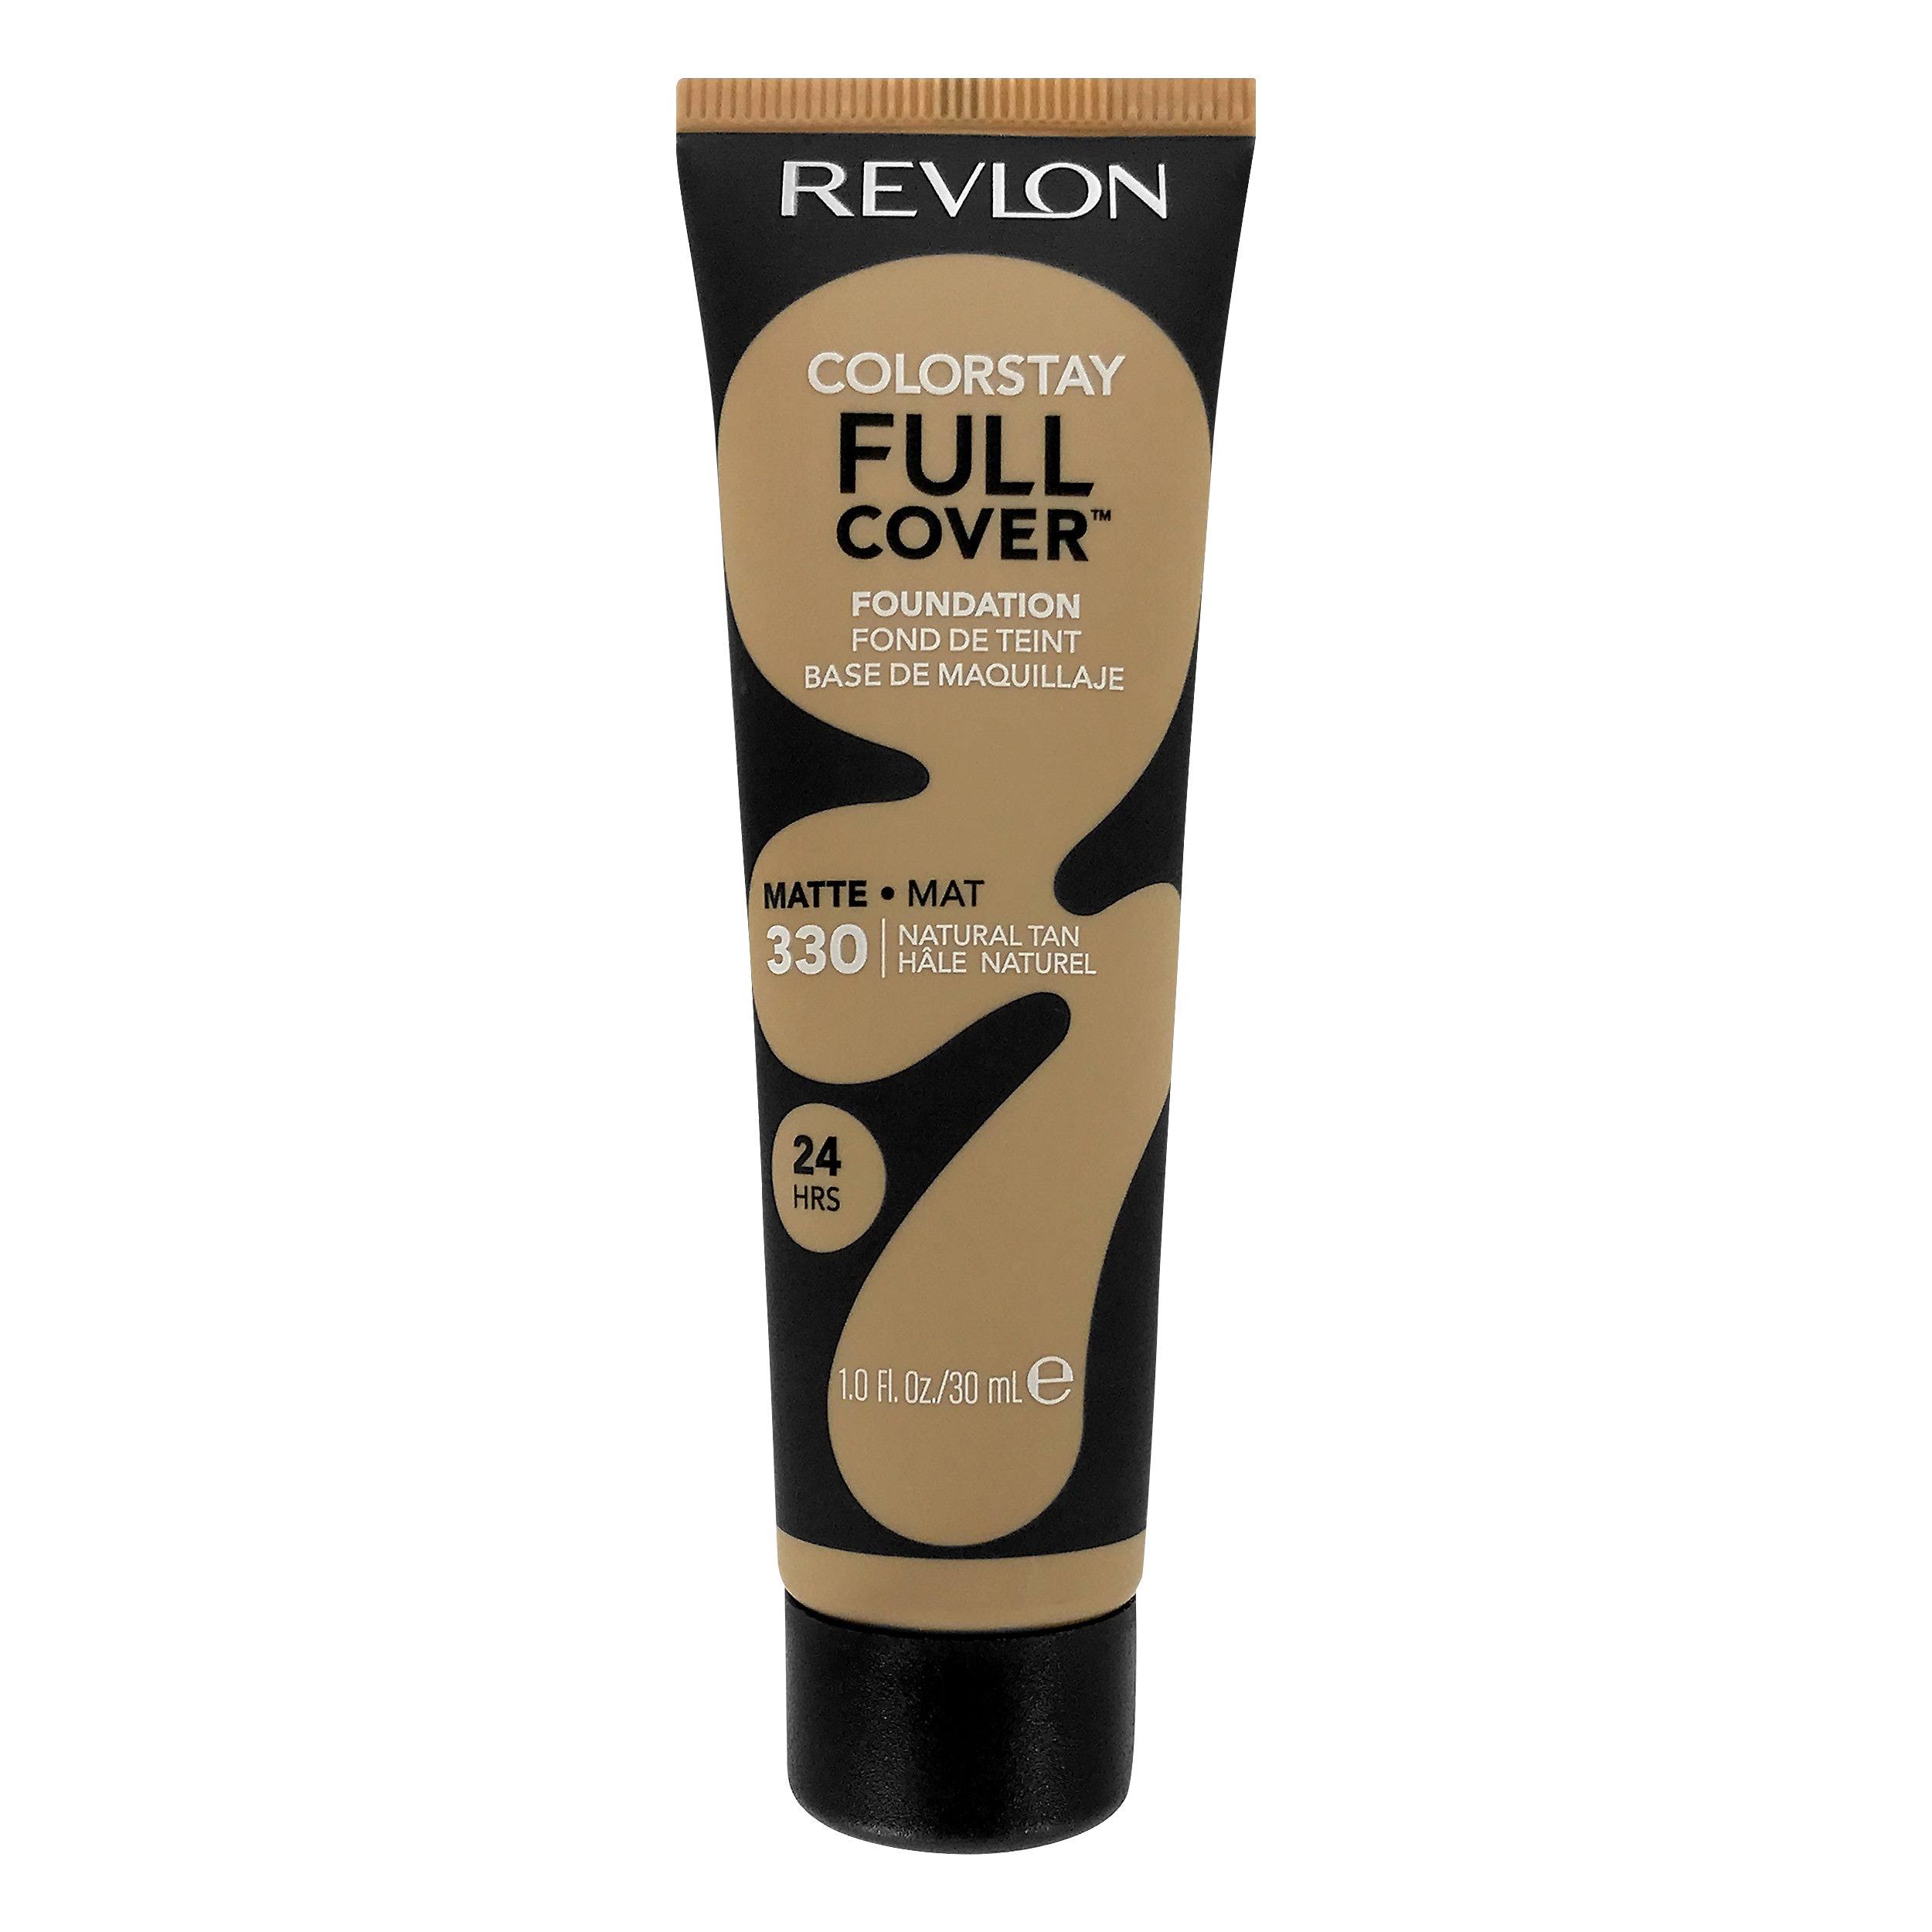 Revlon Colorstay Full Cover Foundation - 330 Natural Tan, 1oz